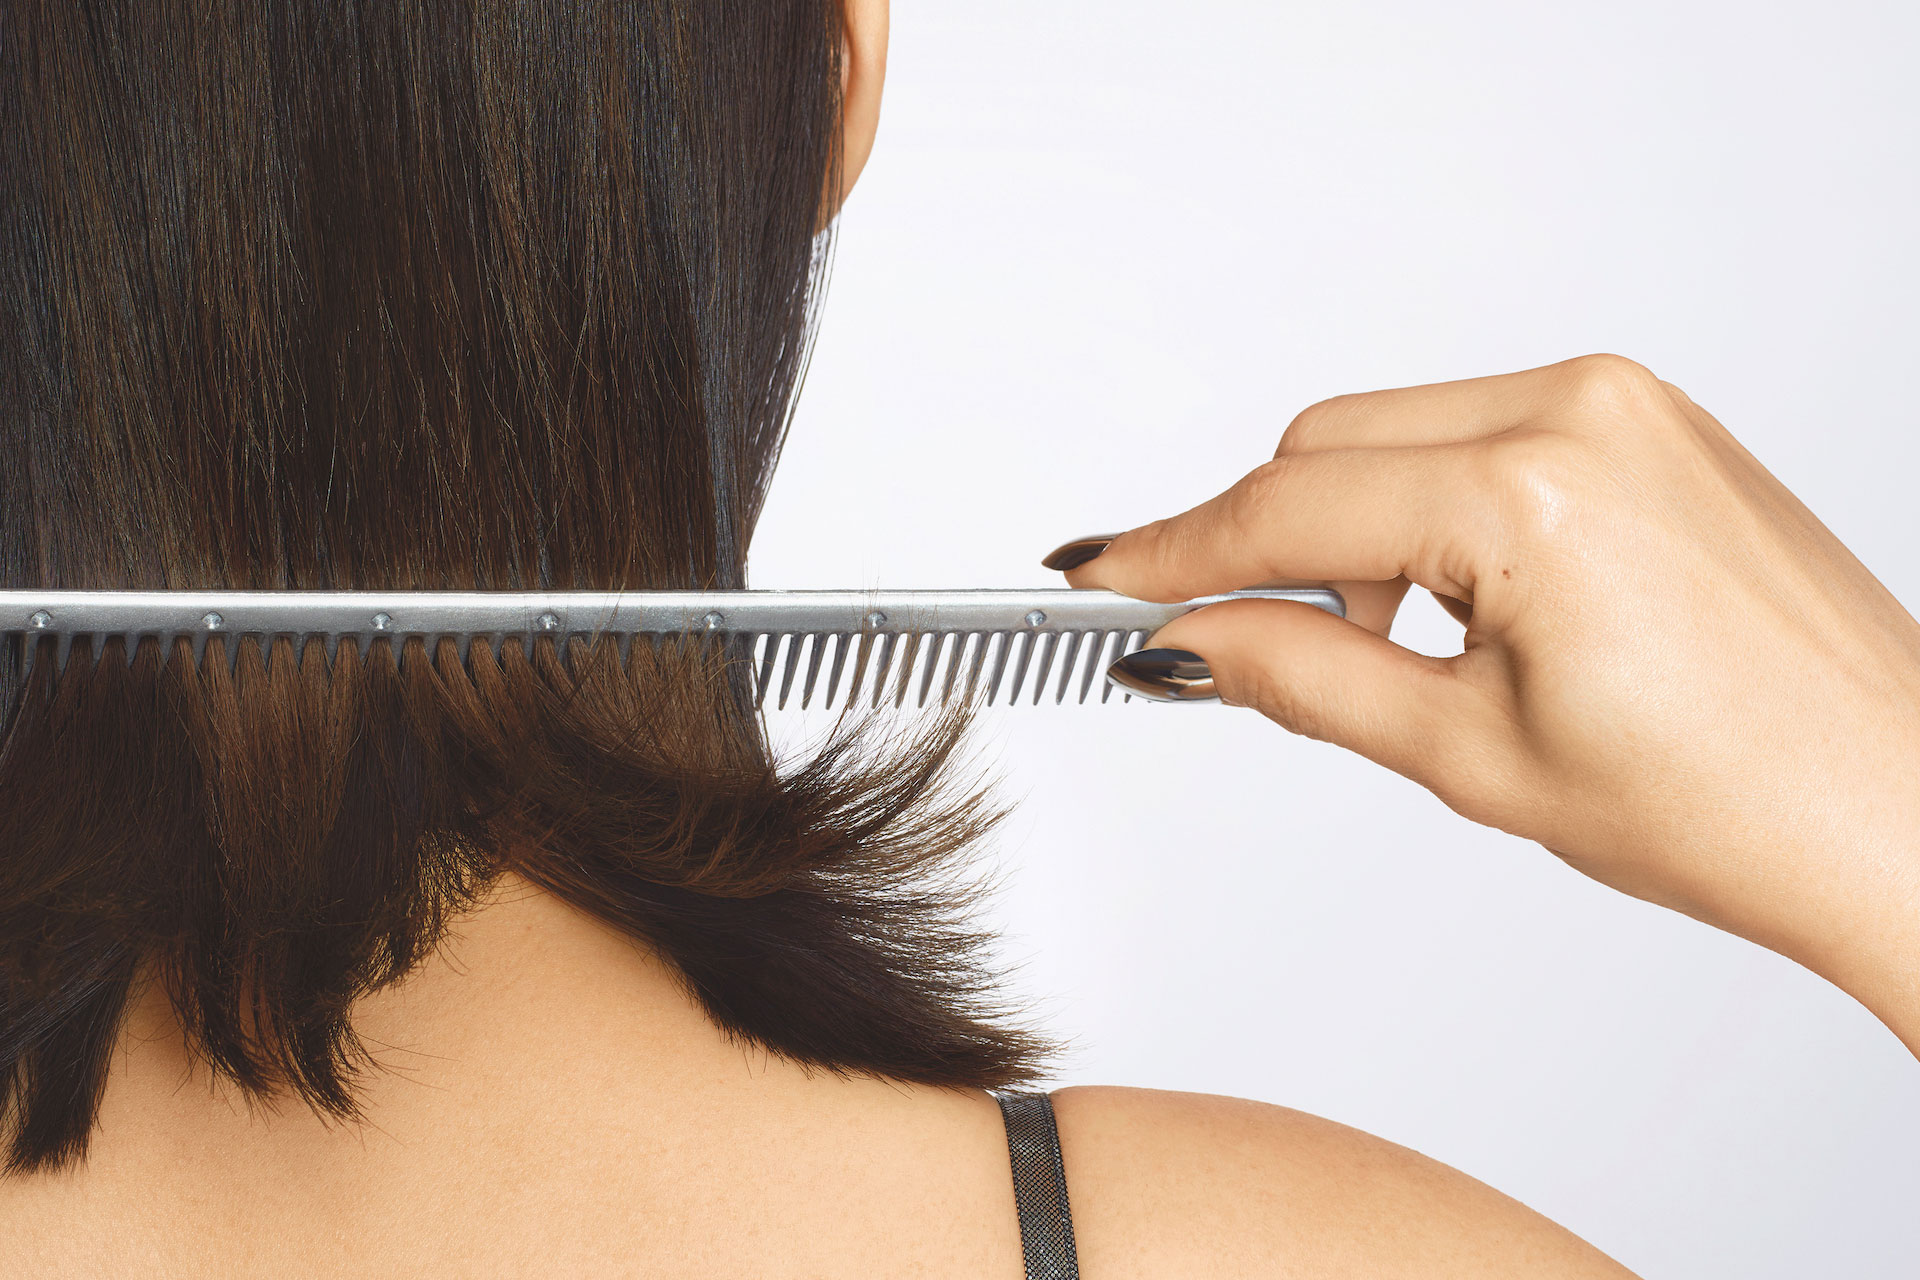 Female pattern hair loss experienced by 50 of postmenopausal women